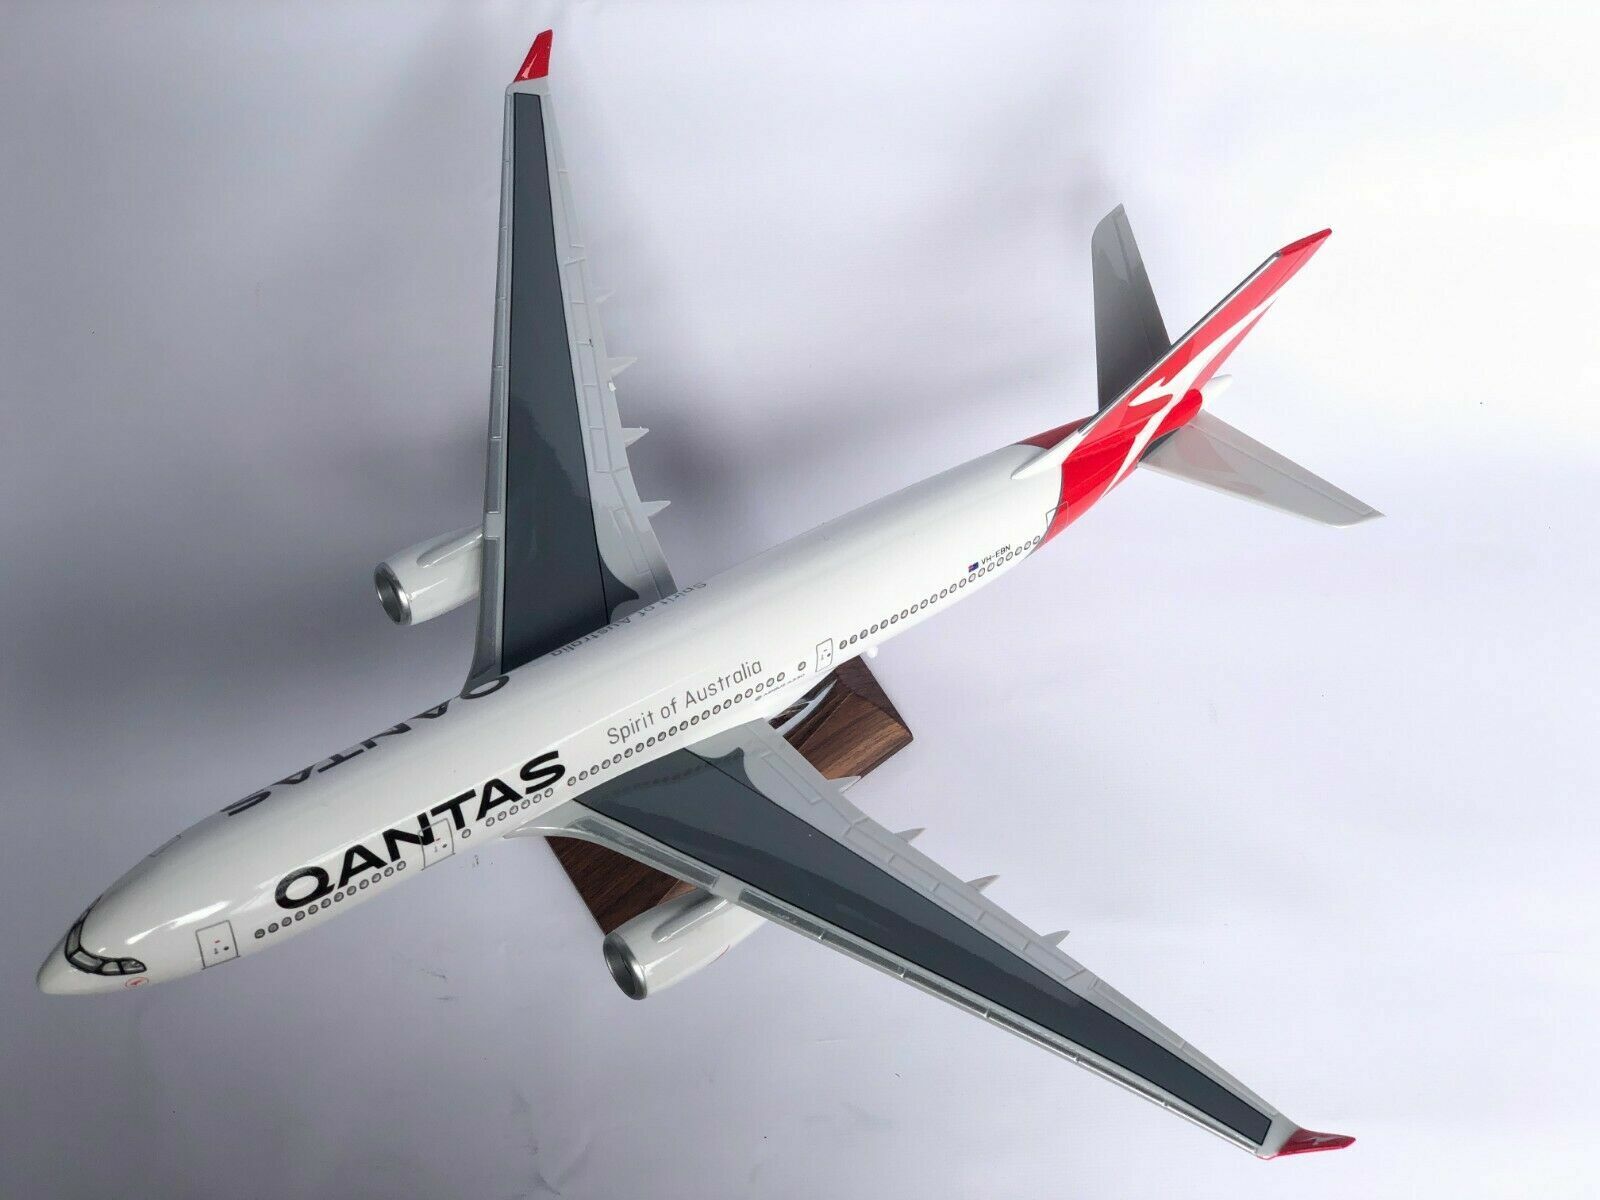 Qantas Large Plane Model Boeing Jet ✈ A330  1:160 Airplane Apx 45Cm  